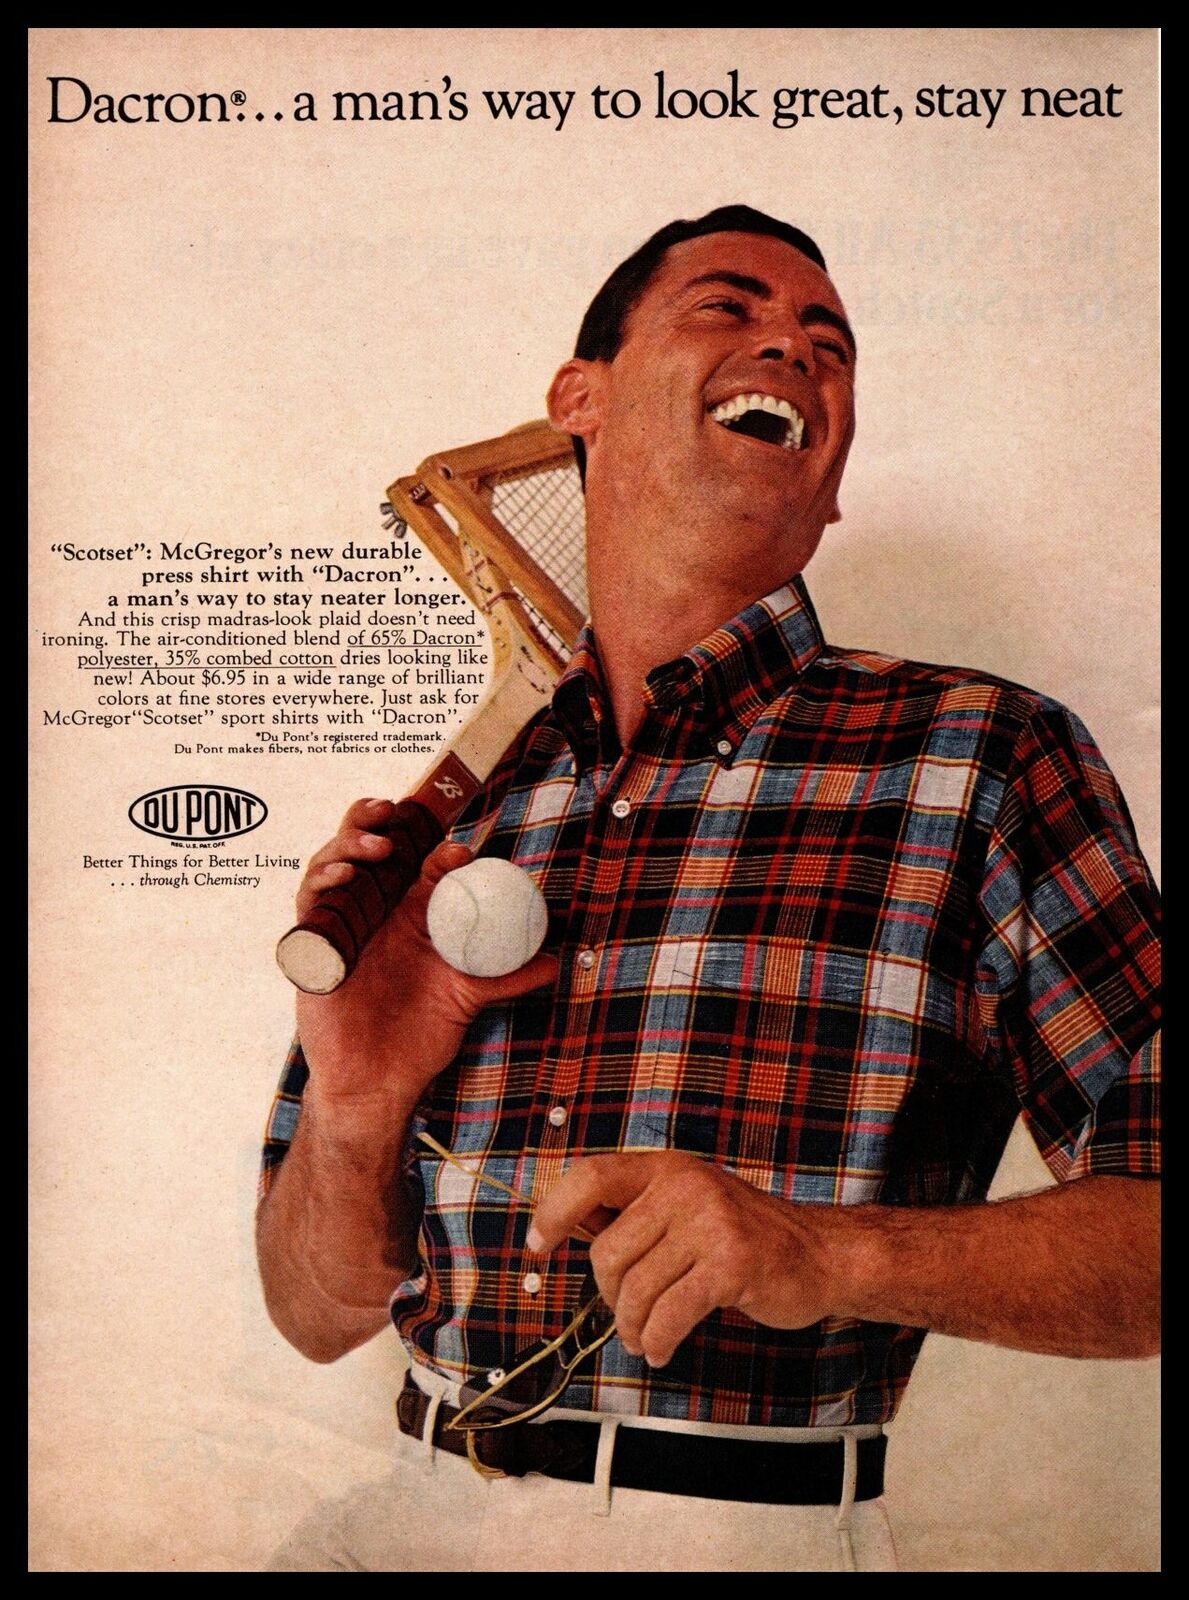 1966 MacGregor Dacron By DuPont Short Sleeve Sport Shirt Tennis Vintage Print Ad